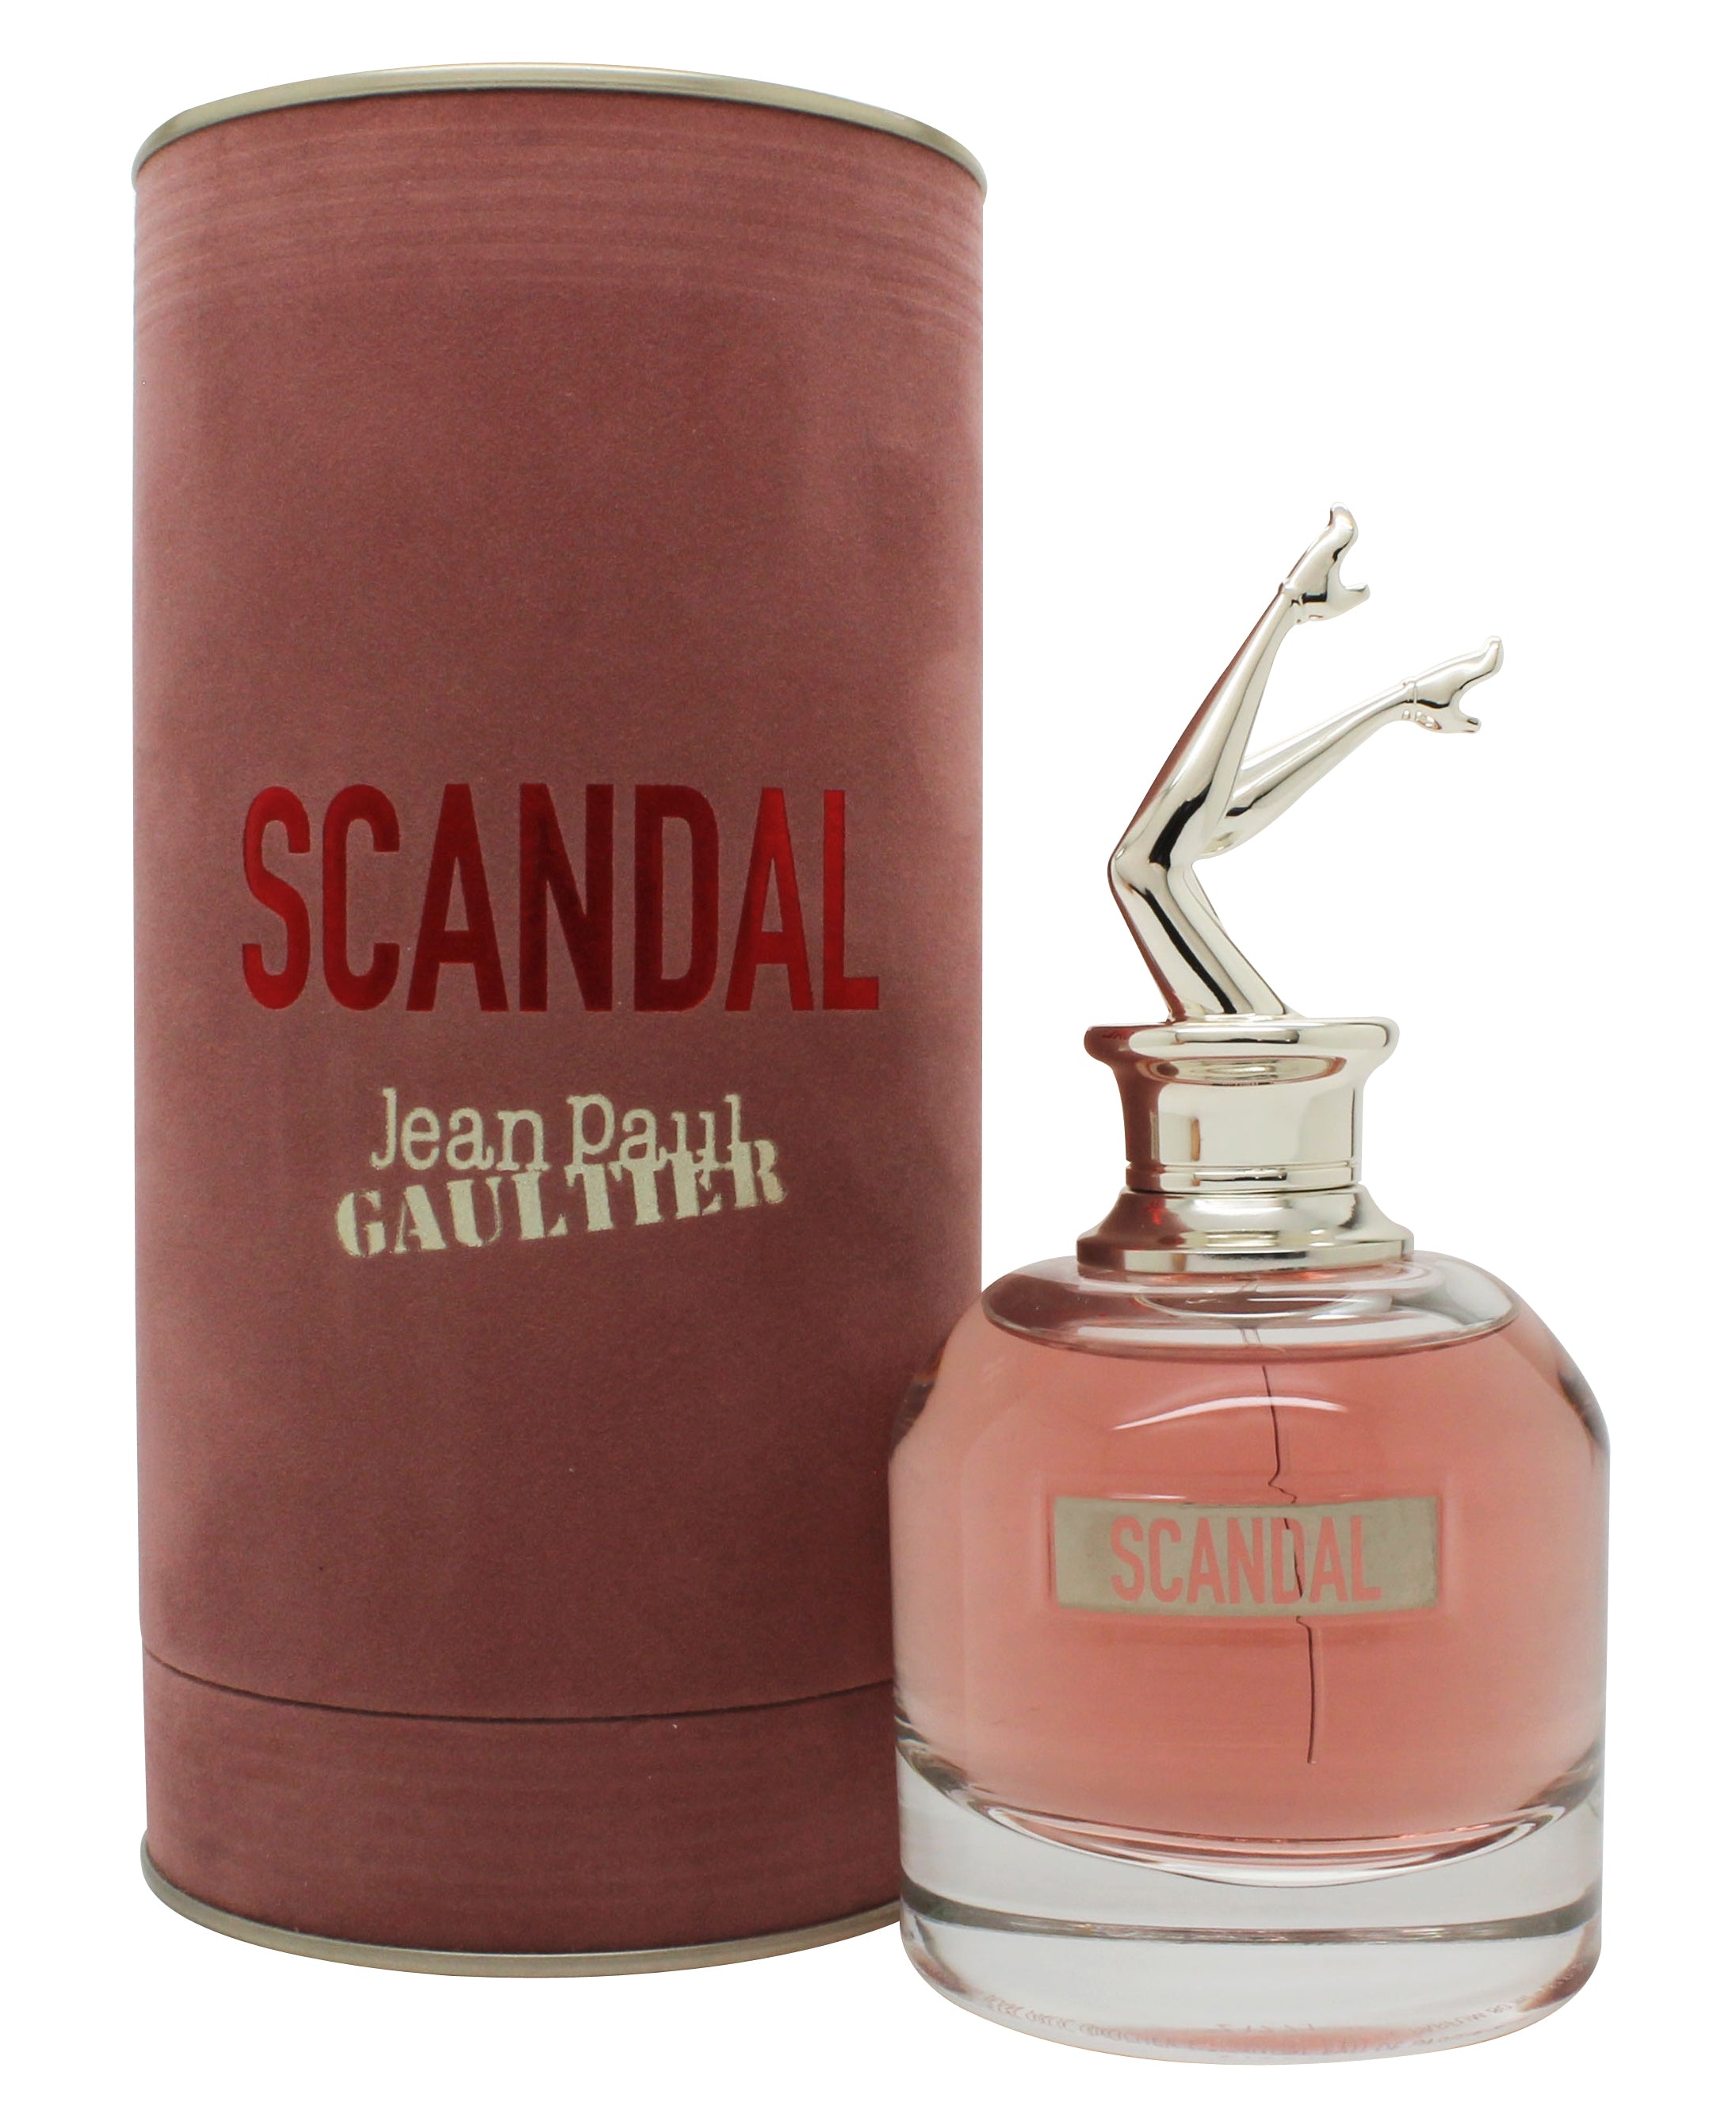 View Jean Paul Gaultier Scandal Eau de Parfum 80ml Sprej information